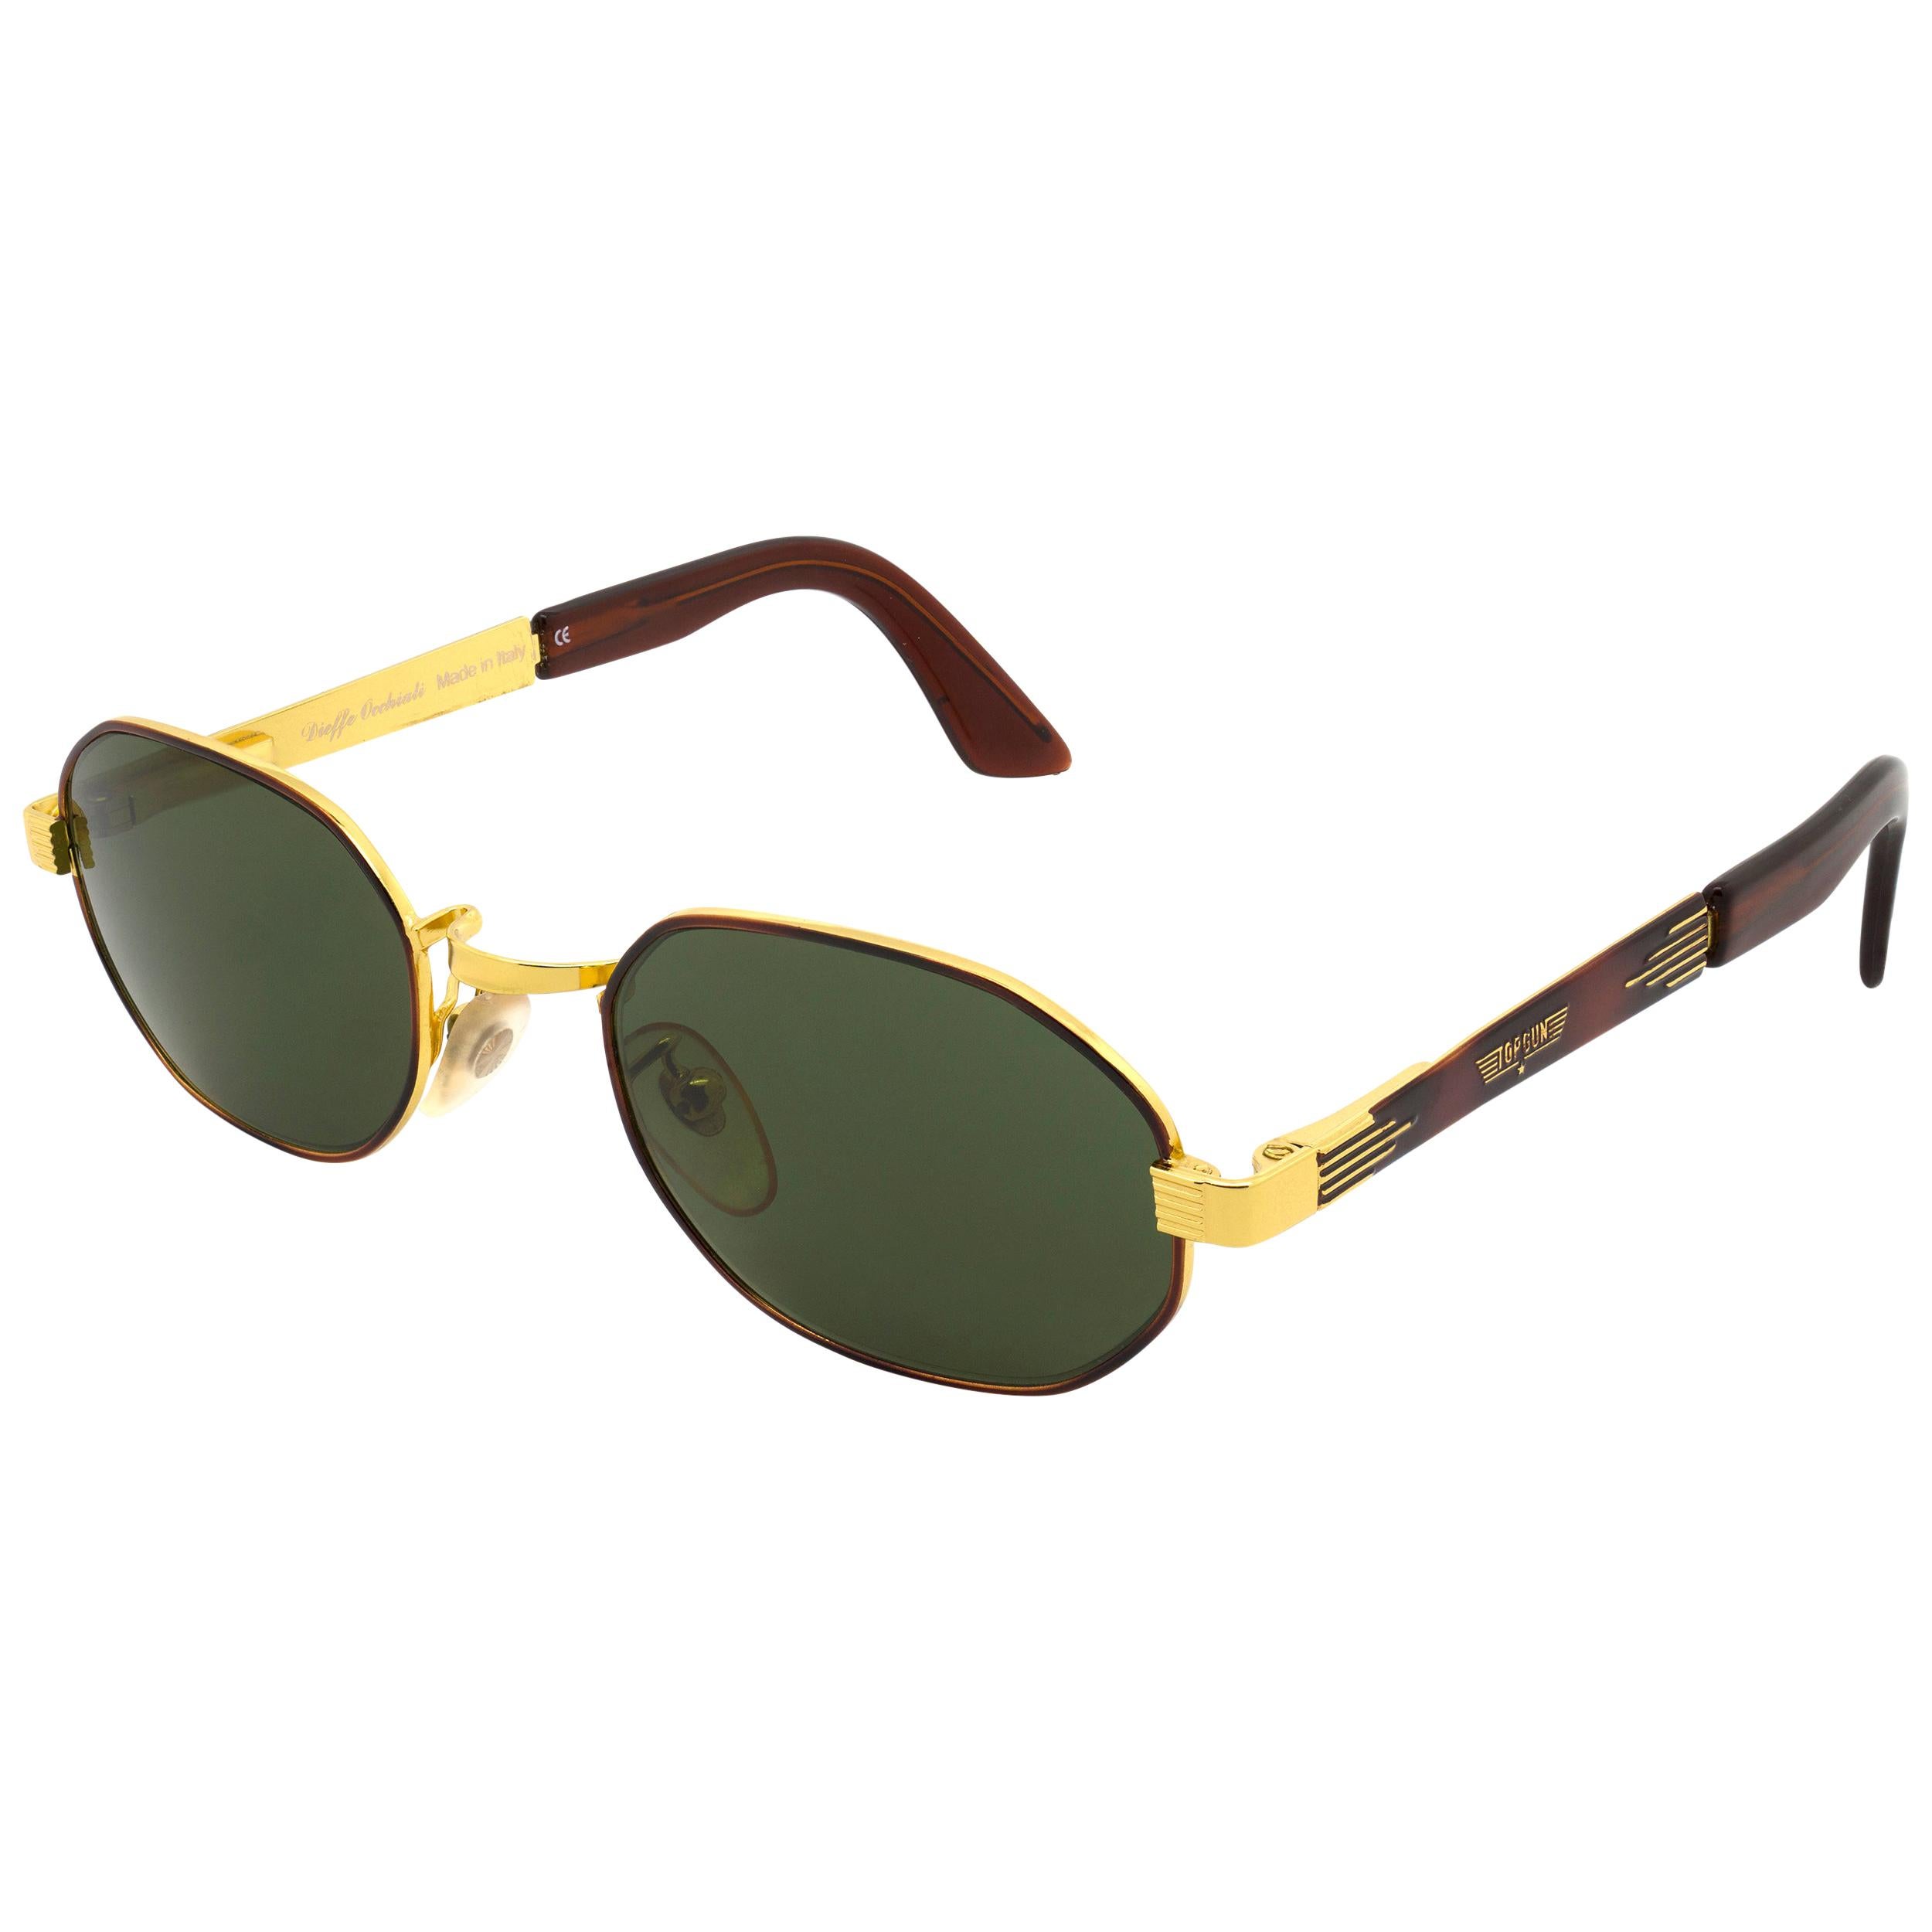 Top Gun hexagonal vintage sunglasses, Italy 90s